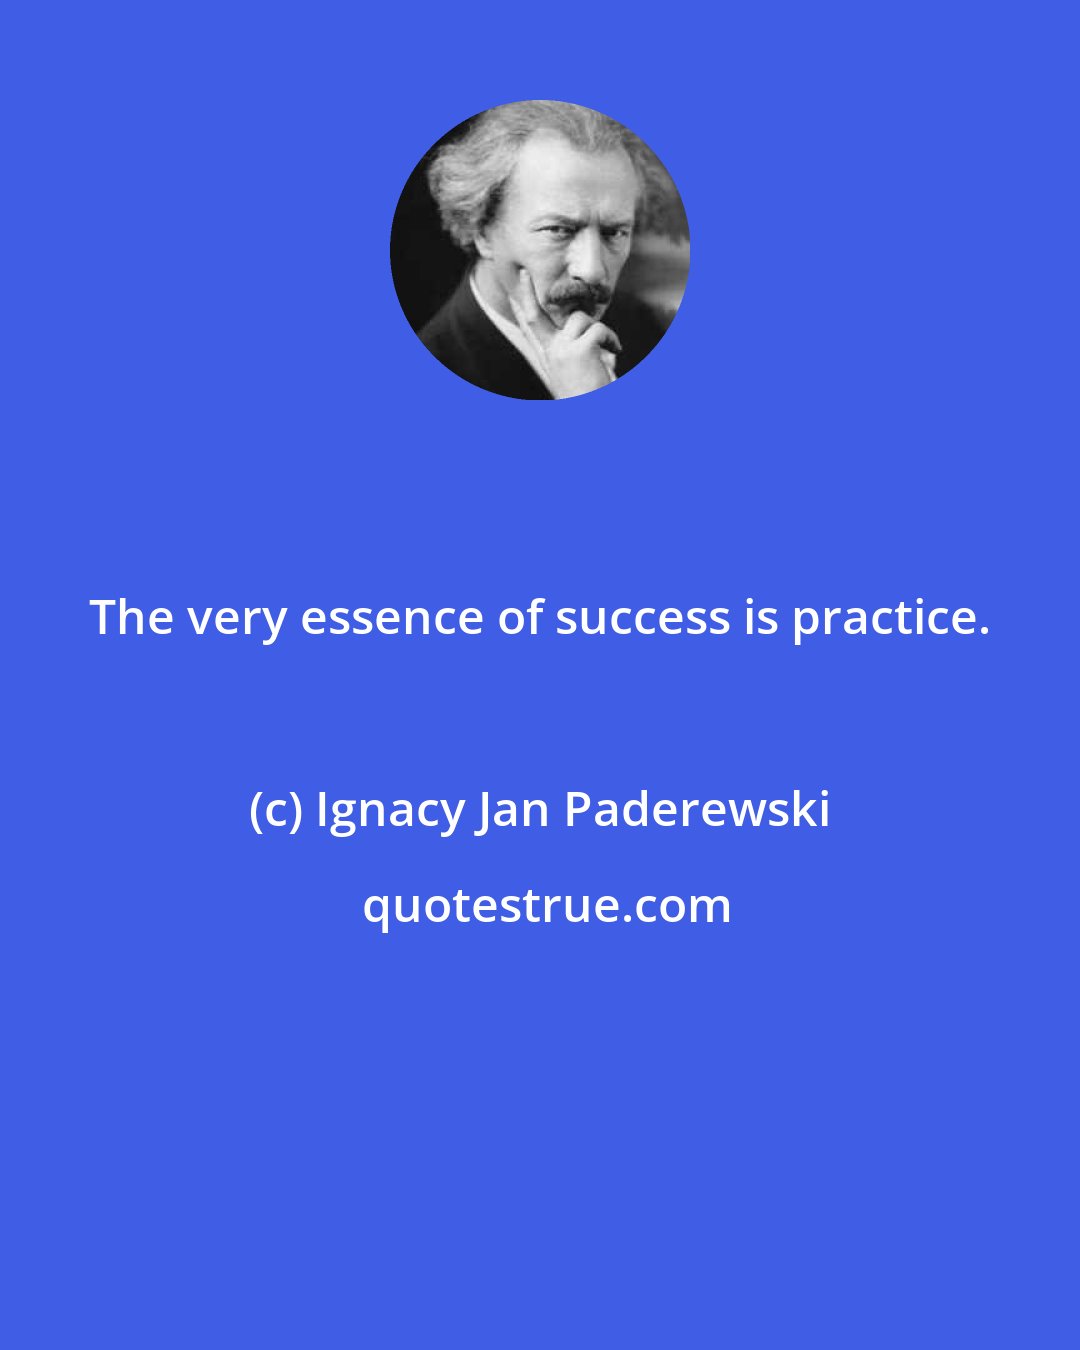 Ignacy Jan Paderewski: The very essence of success is practice.